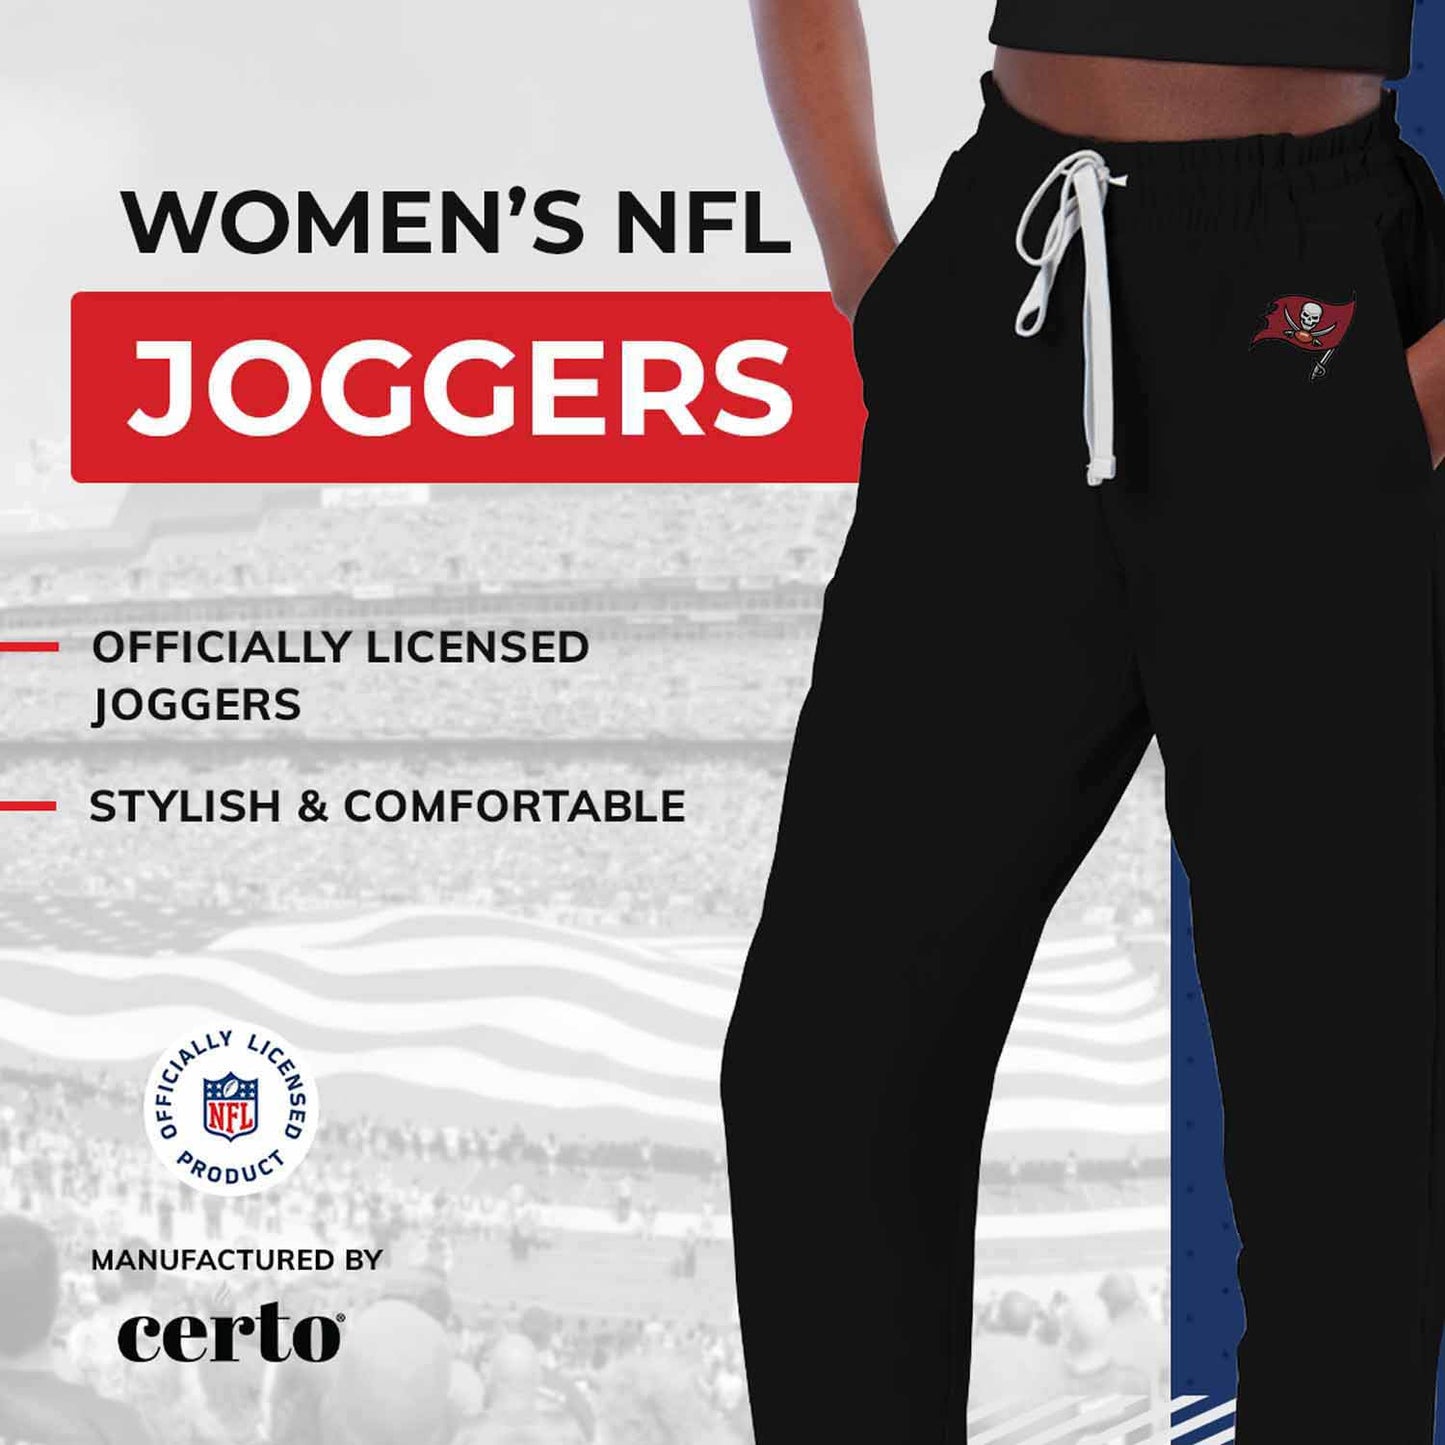 Tampa Bay Buccaneers NFL Women's Phase Jogger Pants - Black